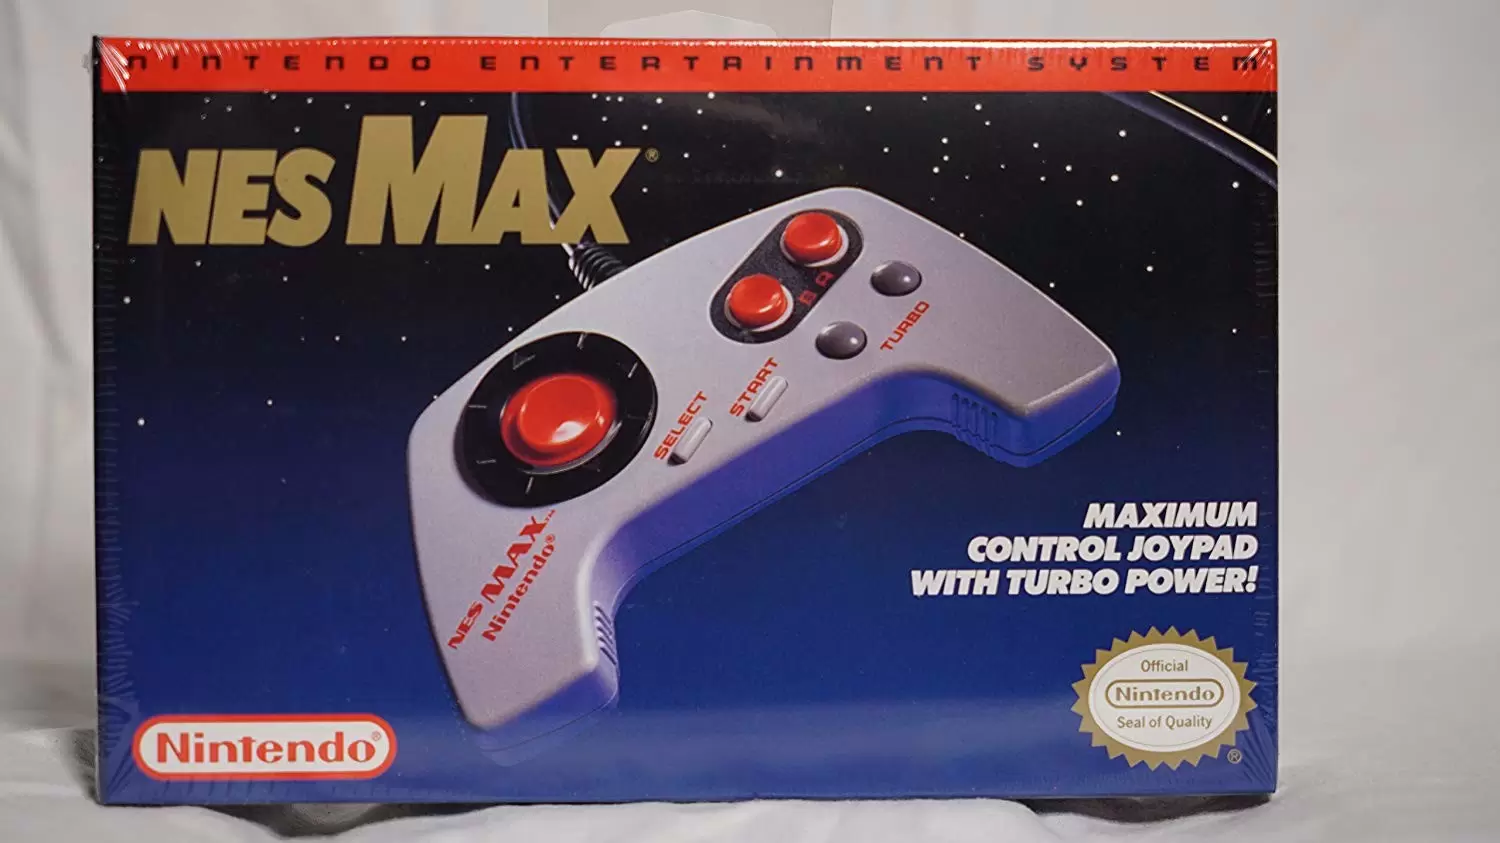 Nintendo Entertainment System Stuff - Nes Max